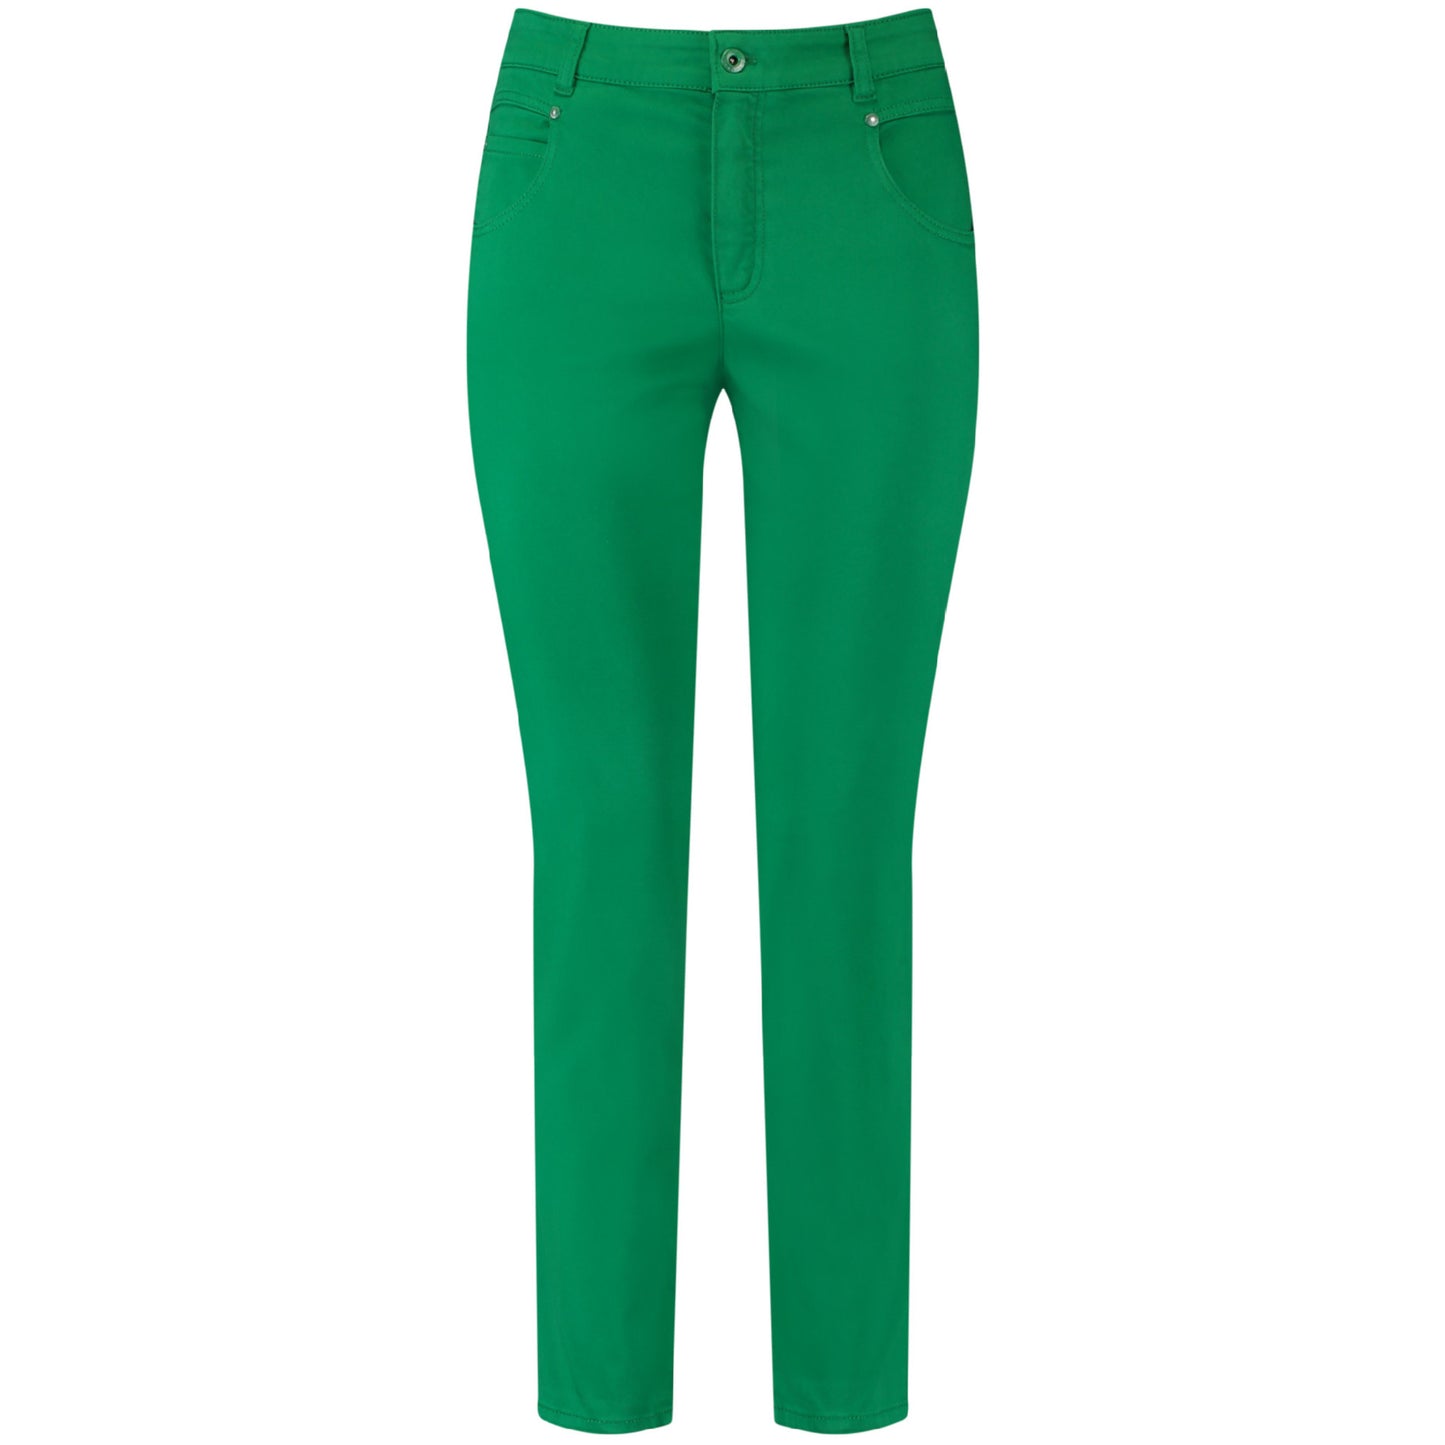 Gerry Weber 120001 31386 50931 Vibrant Green Jeans